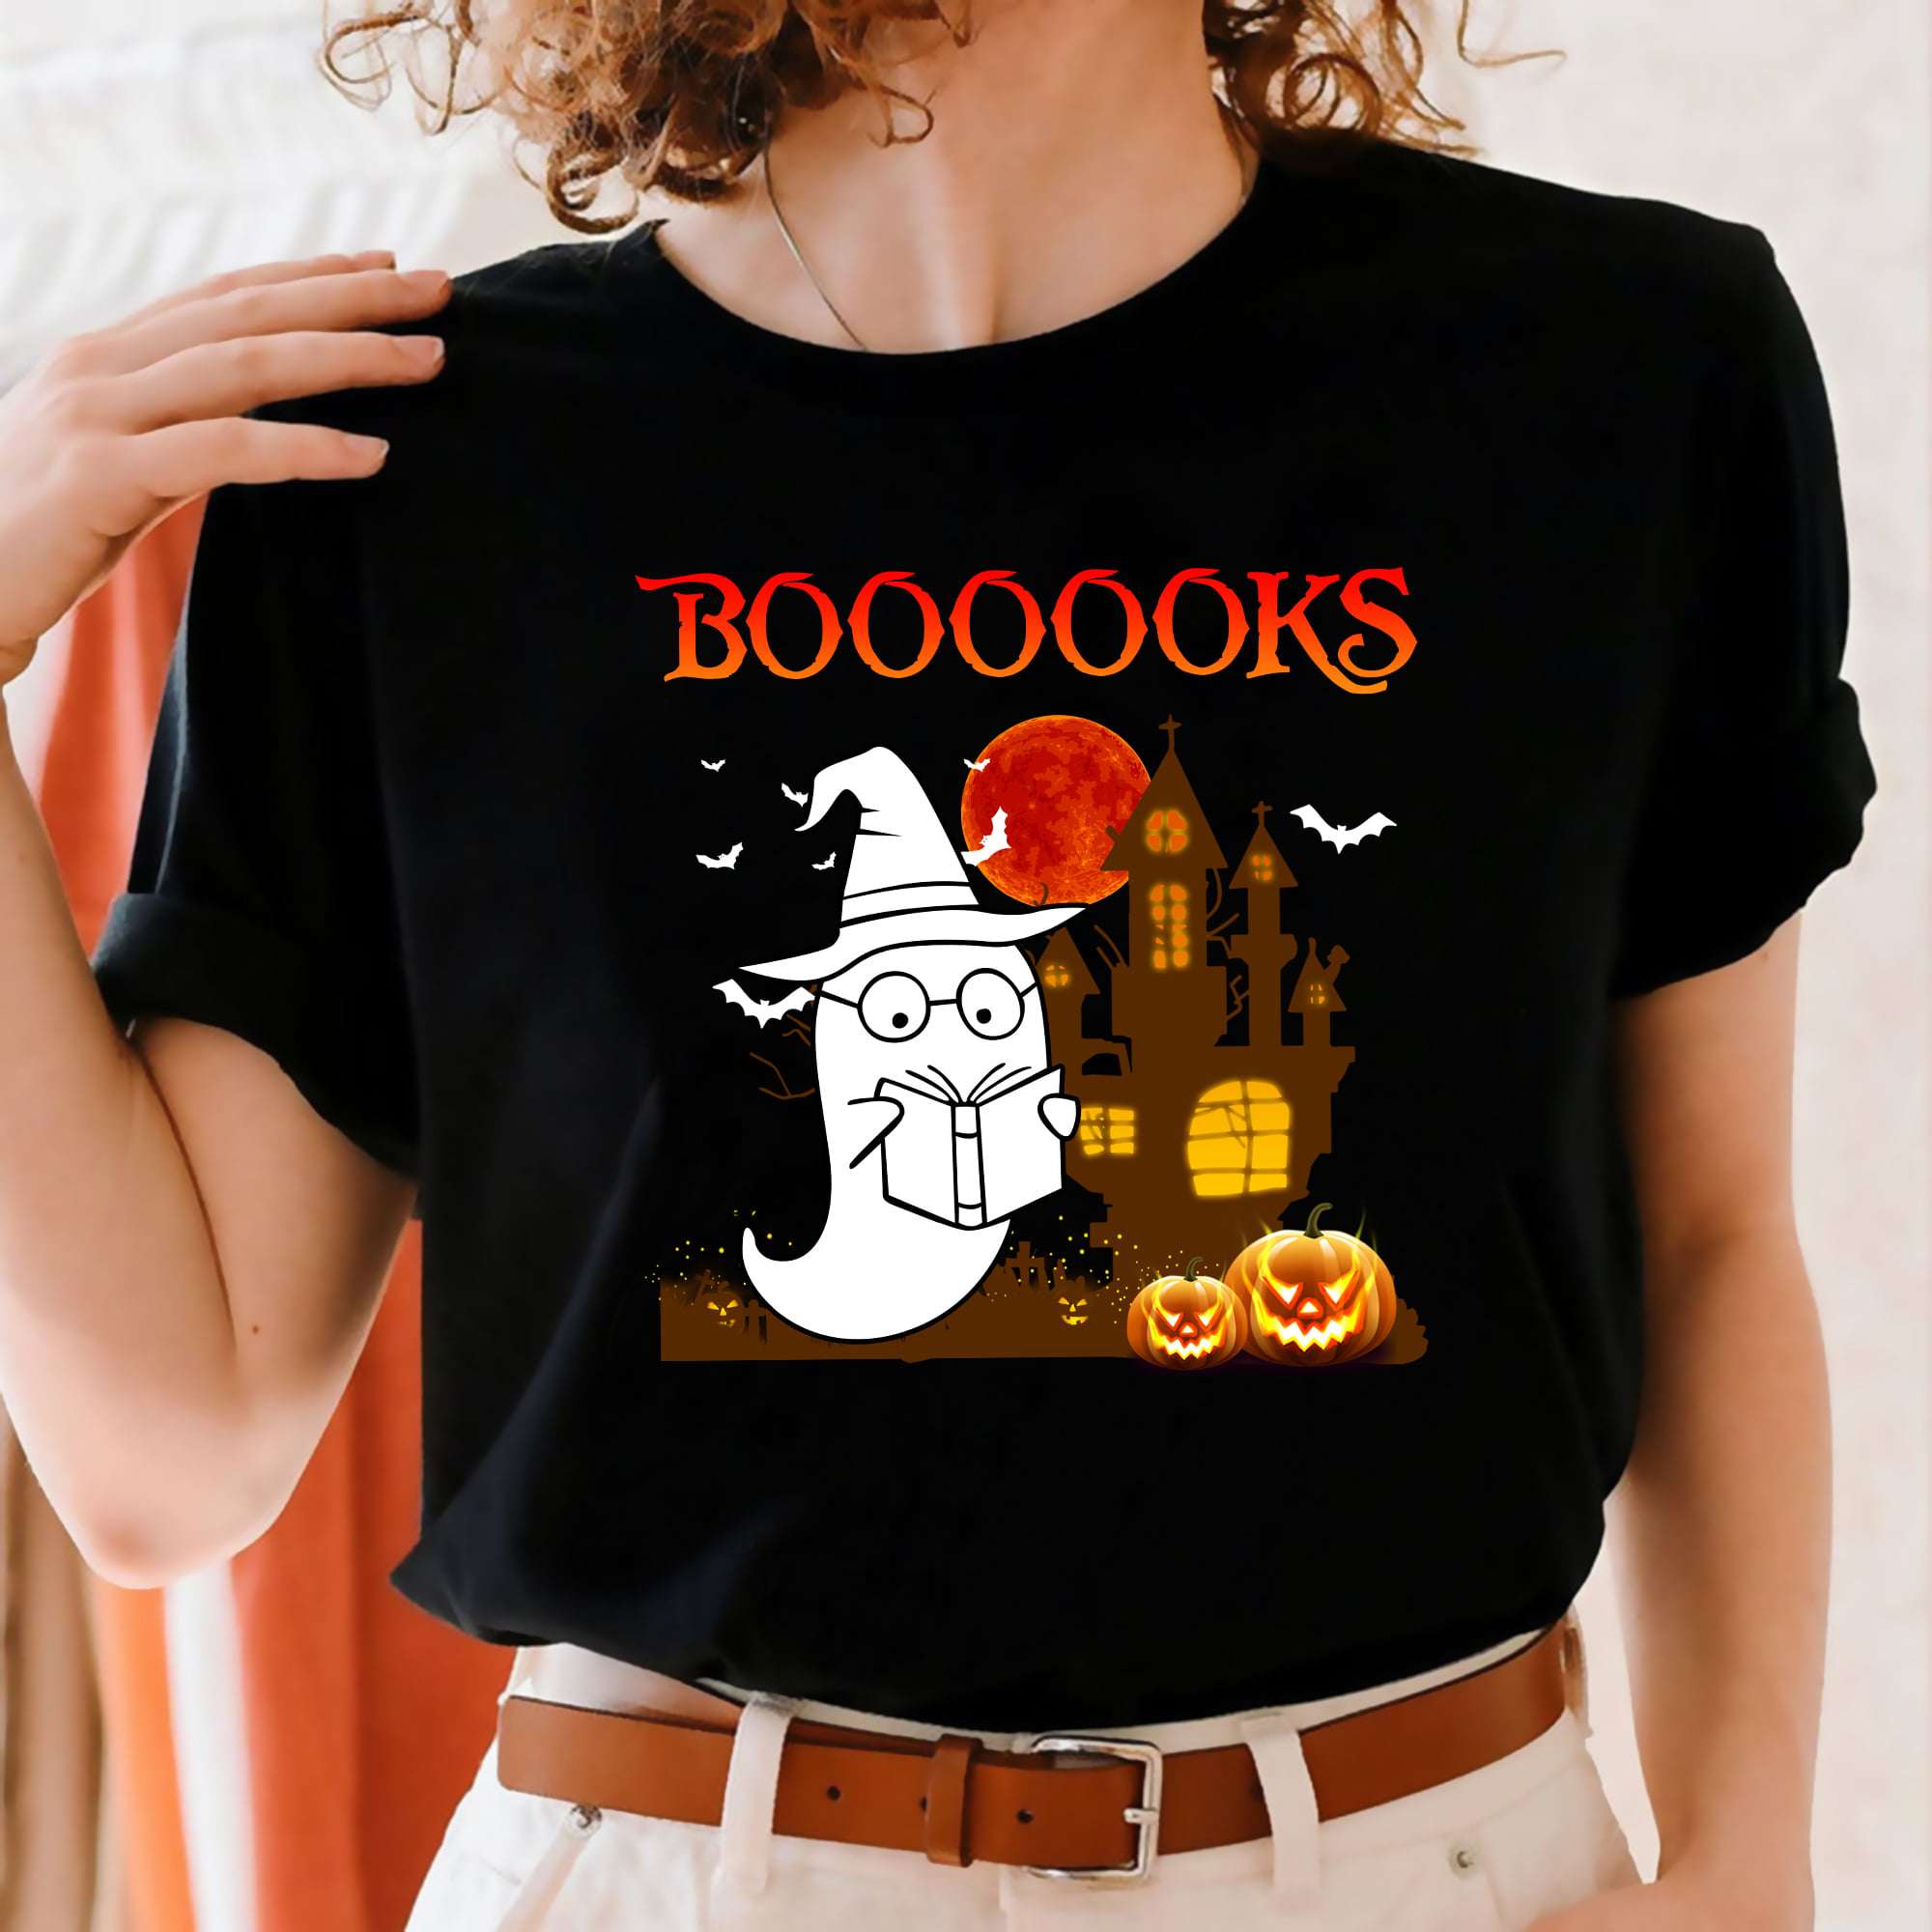 Boooooks - White ghost reading books, bookaholic costume for Halloween, Happy halloween